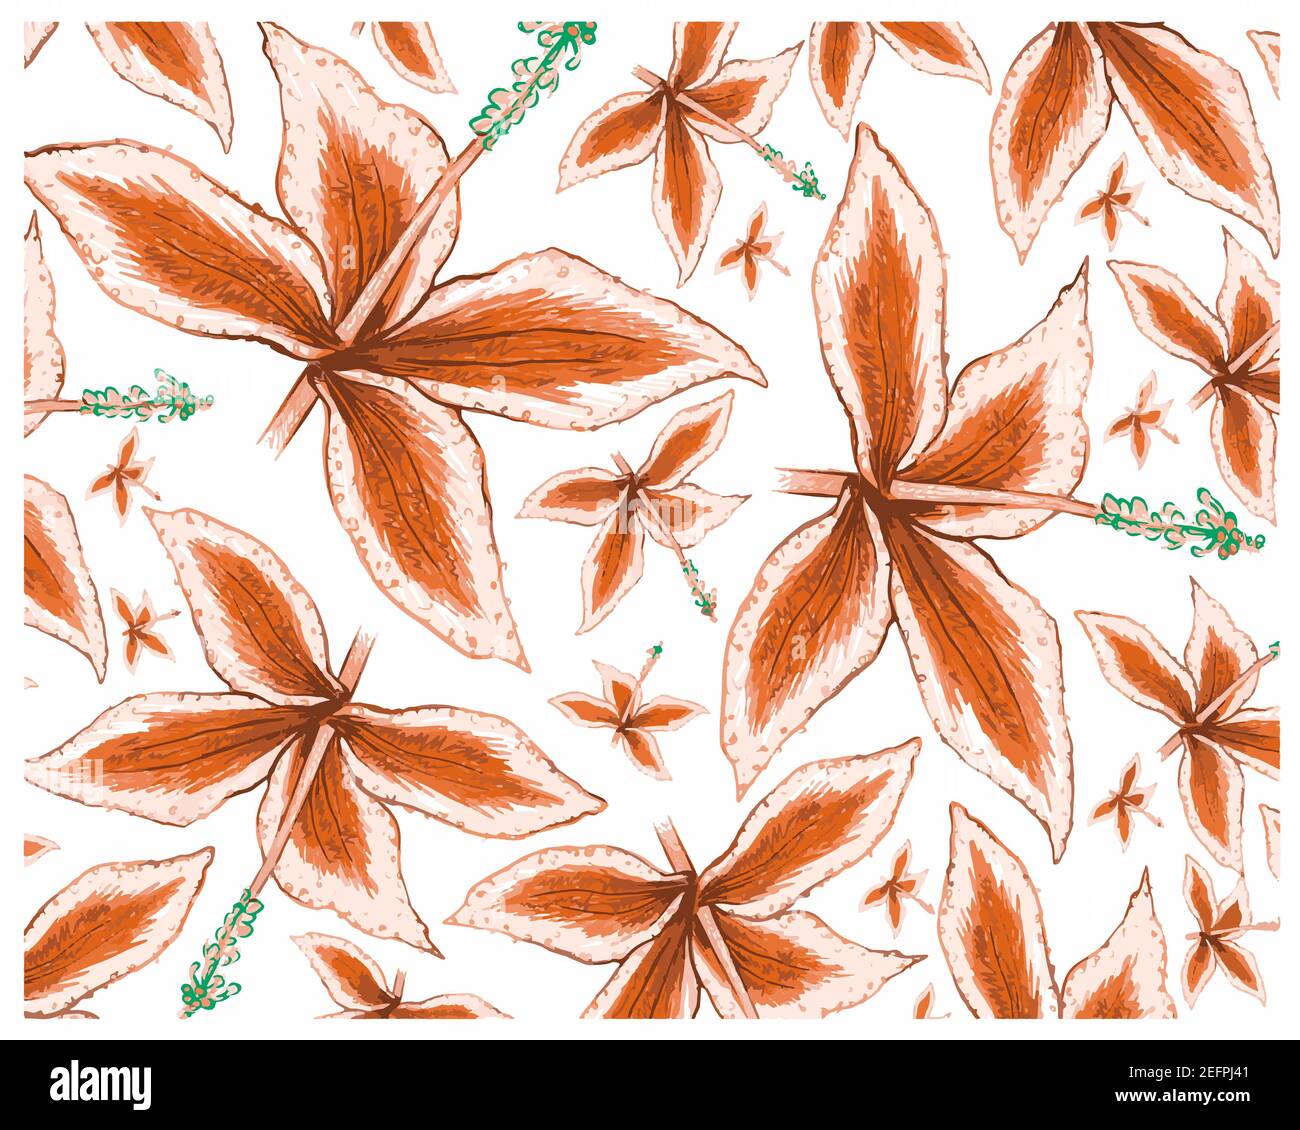 Illustration Background of Beautiful Malaxis Calophylla or Crepidium Calophyllum Plaant Isolated on A White Background. Stock Photo